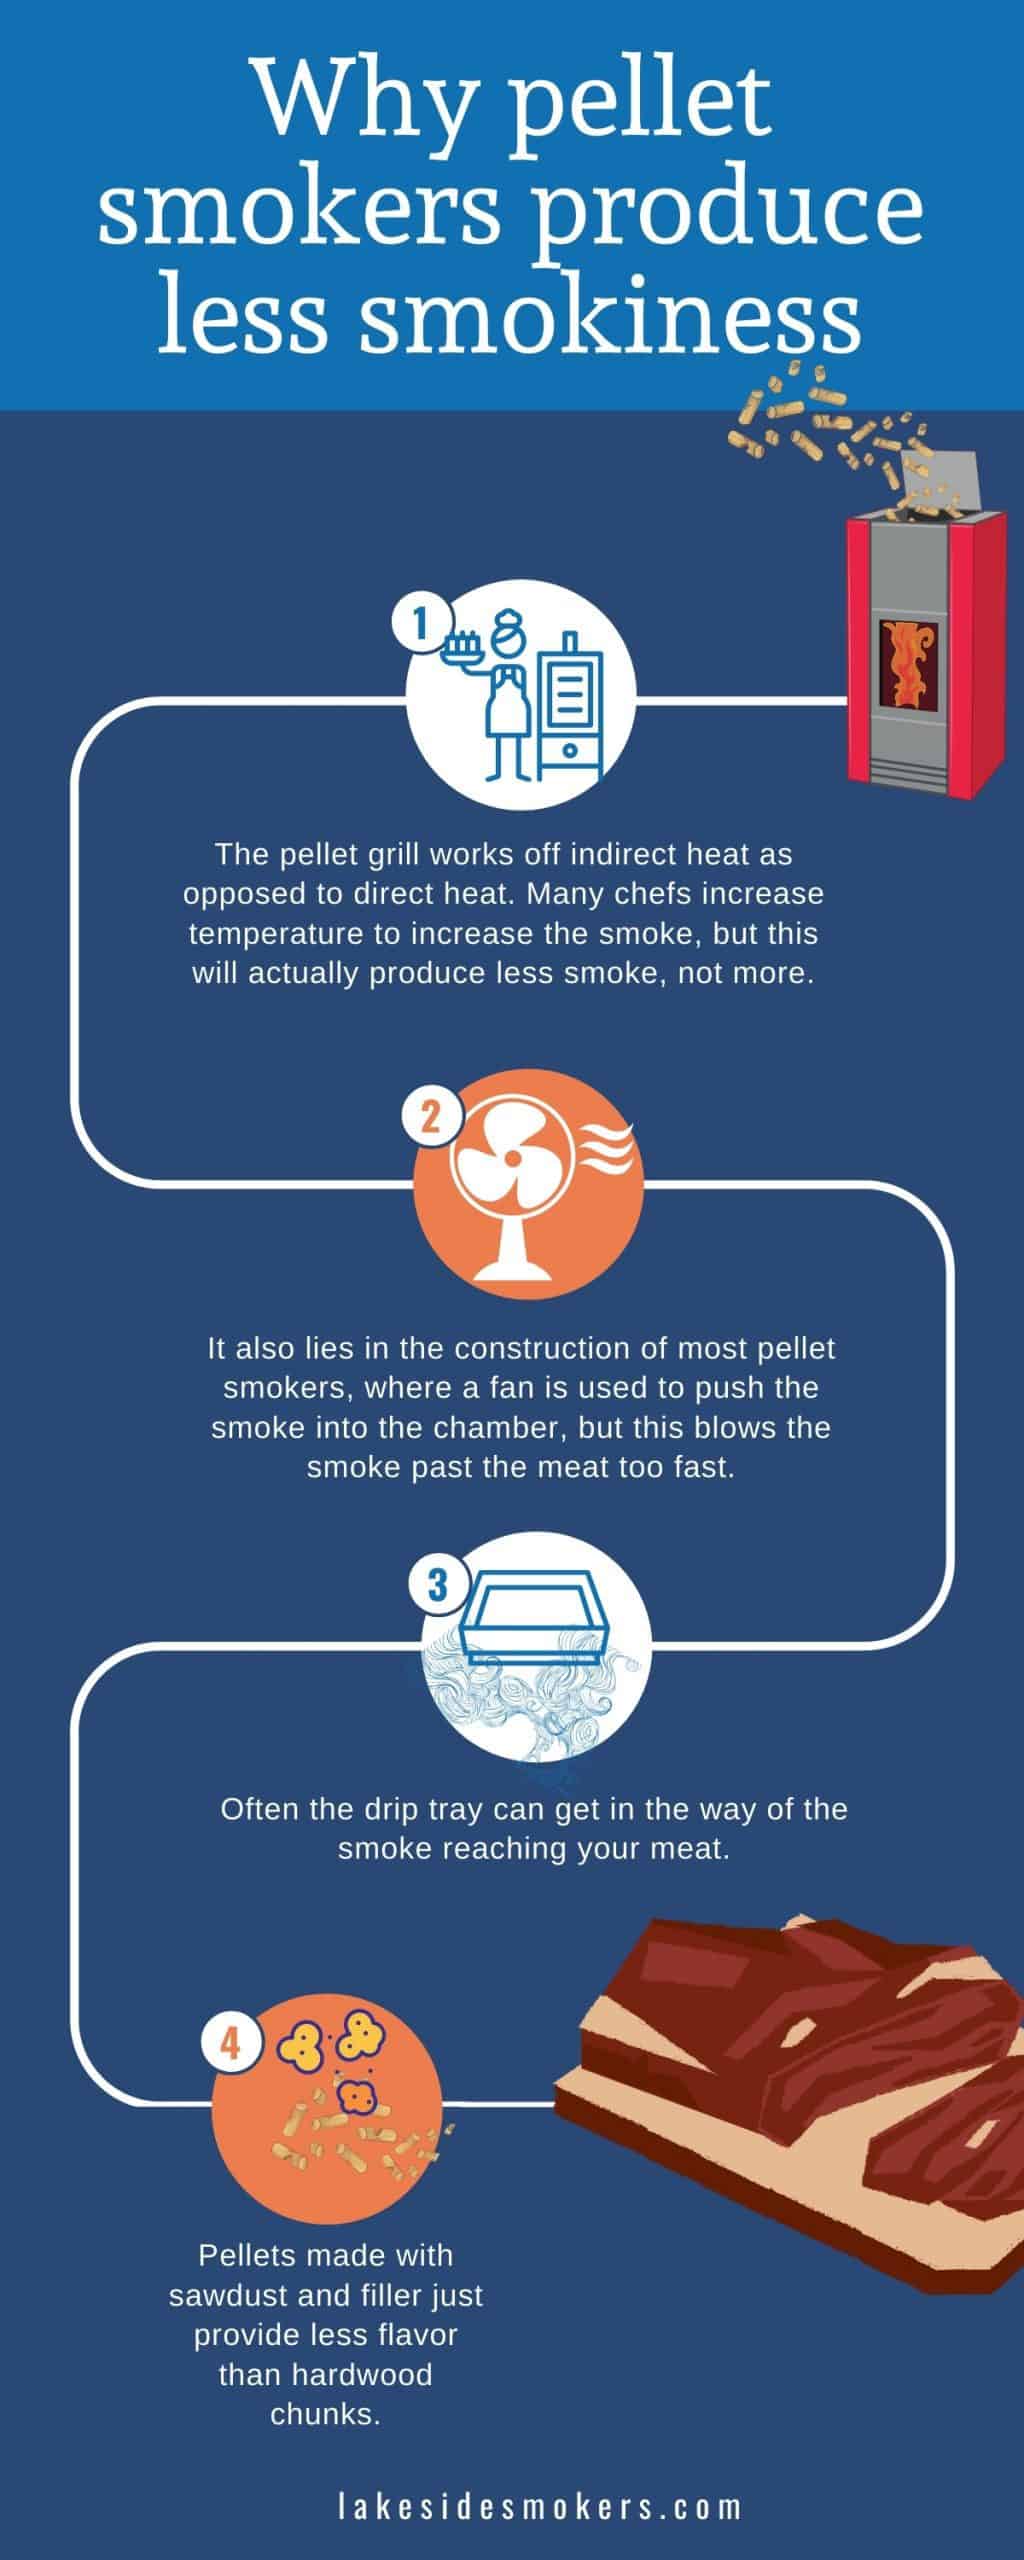 Why pellet smokers produce less smokiness